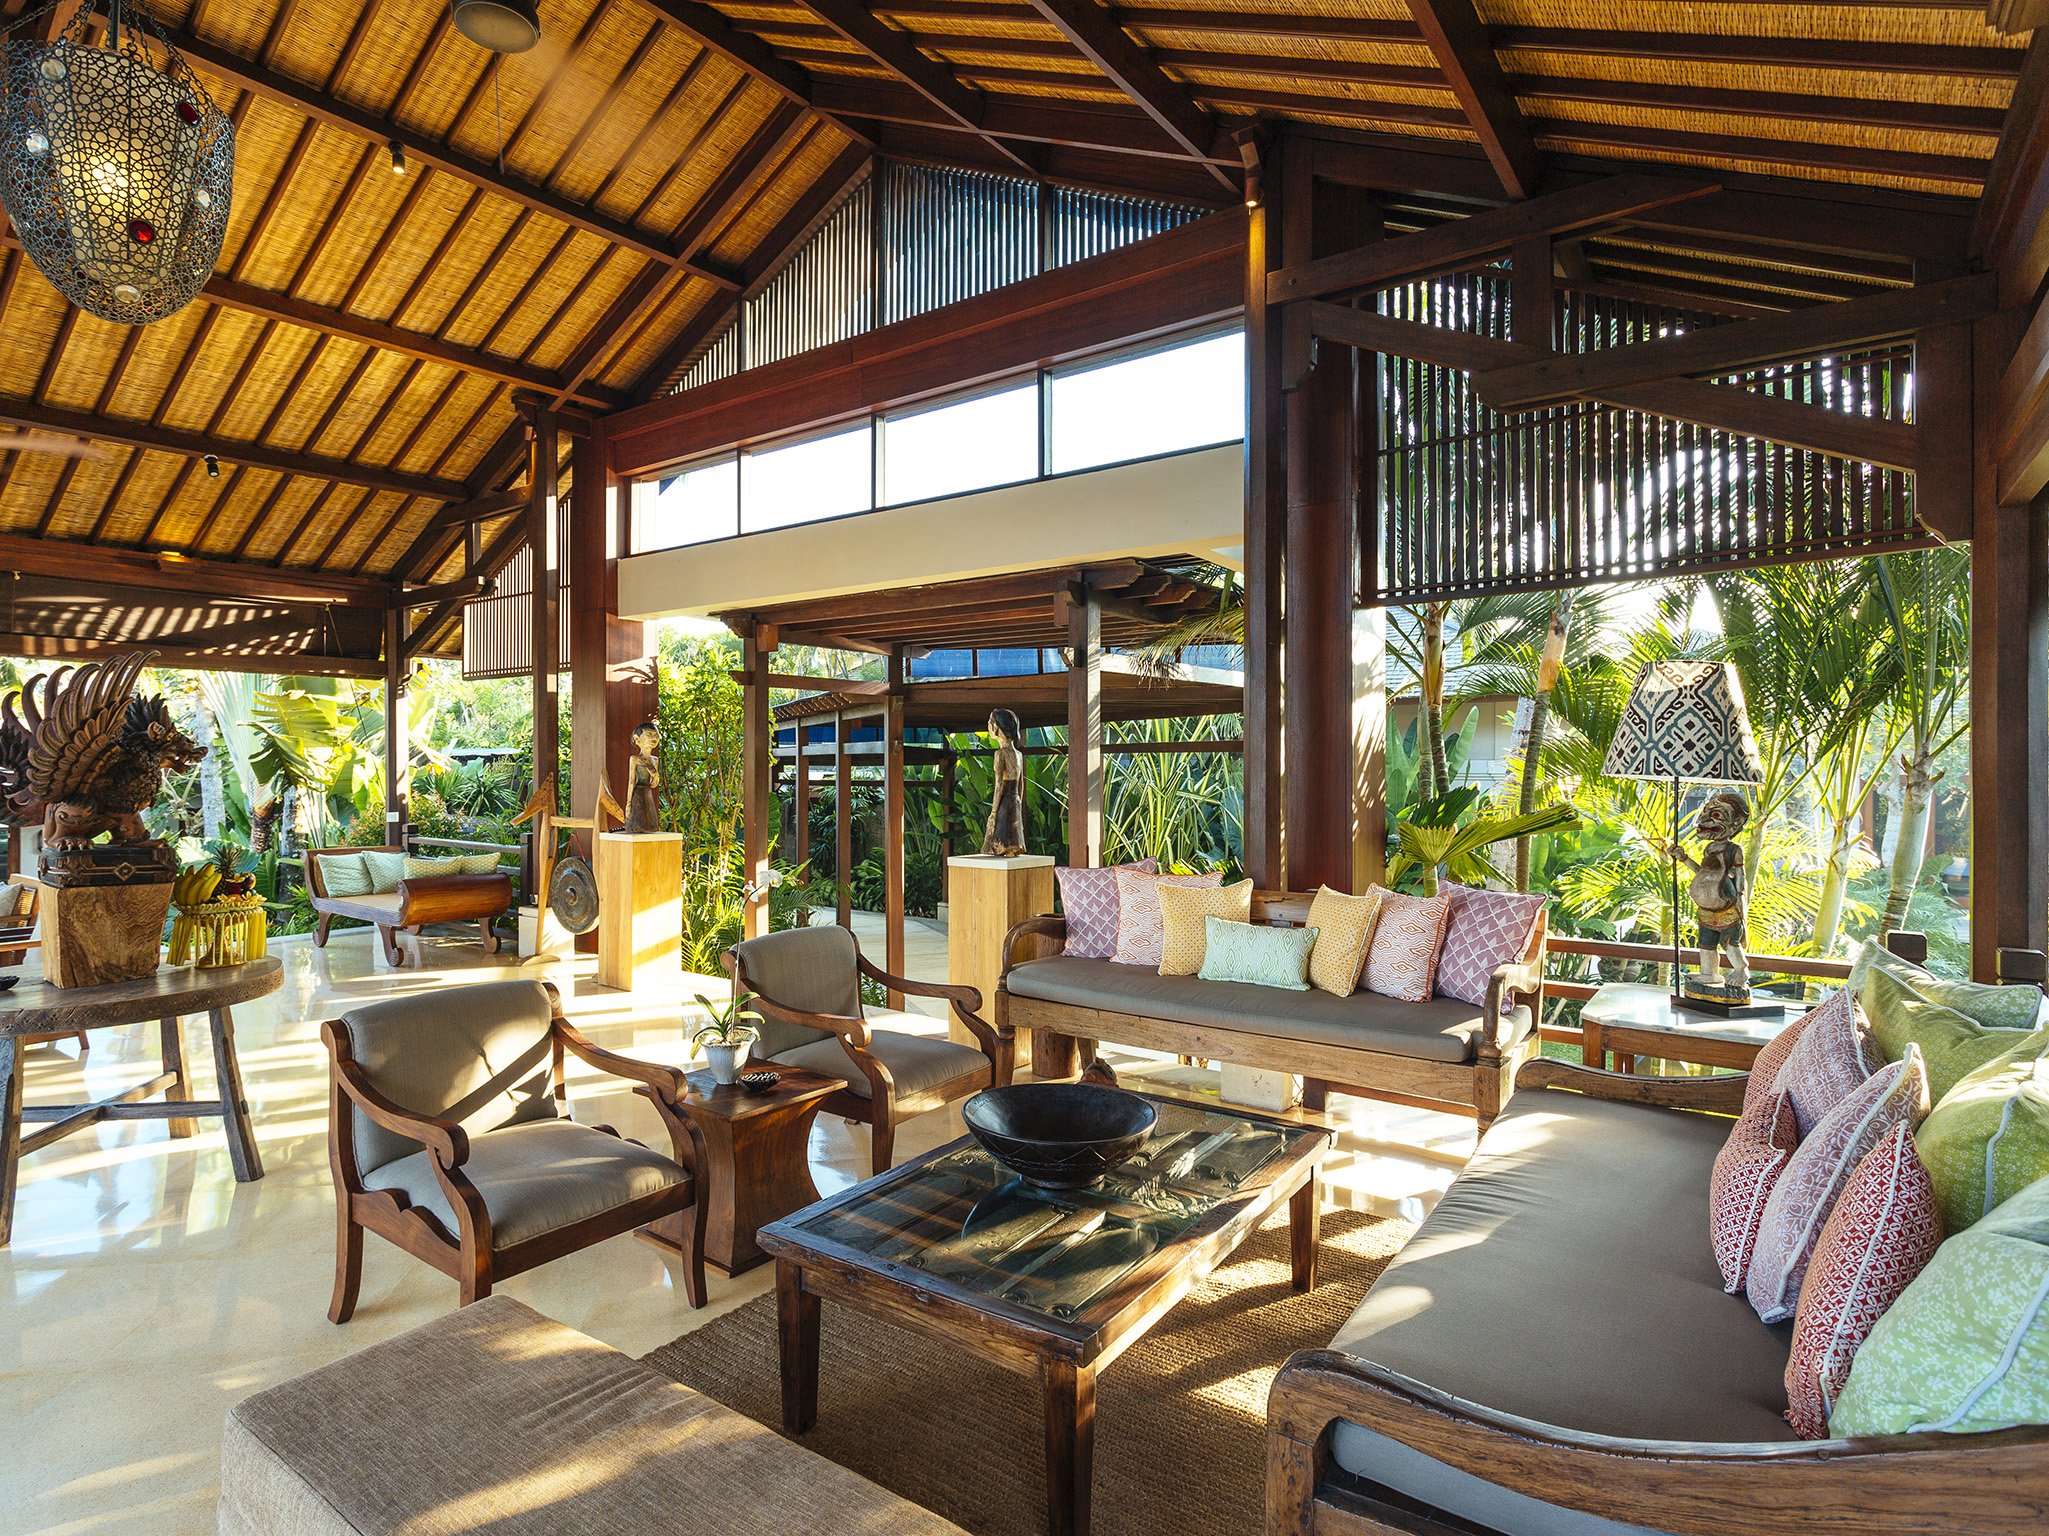 Luxurious Accommodations, Image from Villa Semarapura website